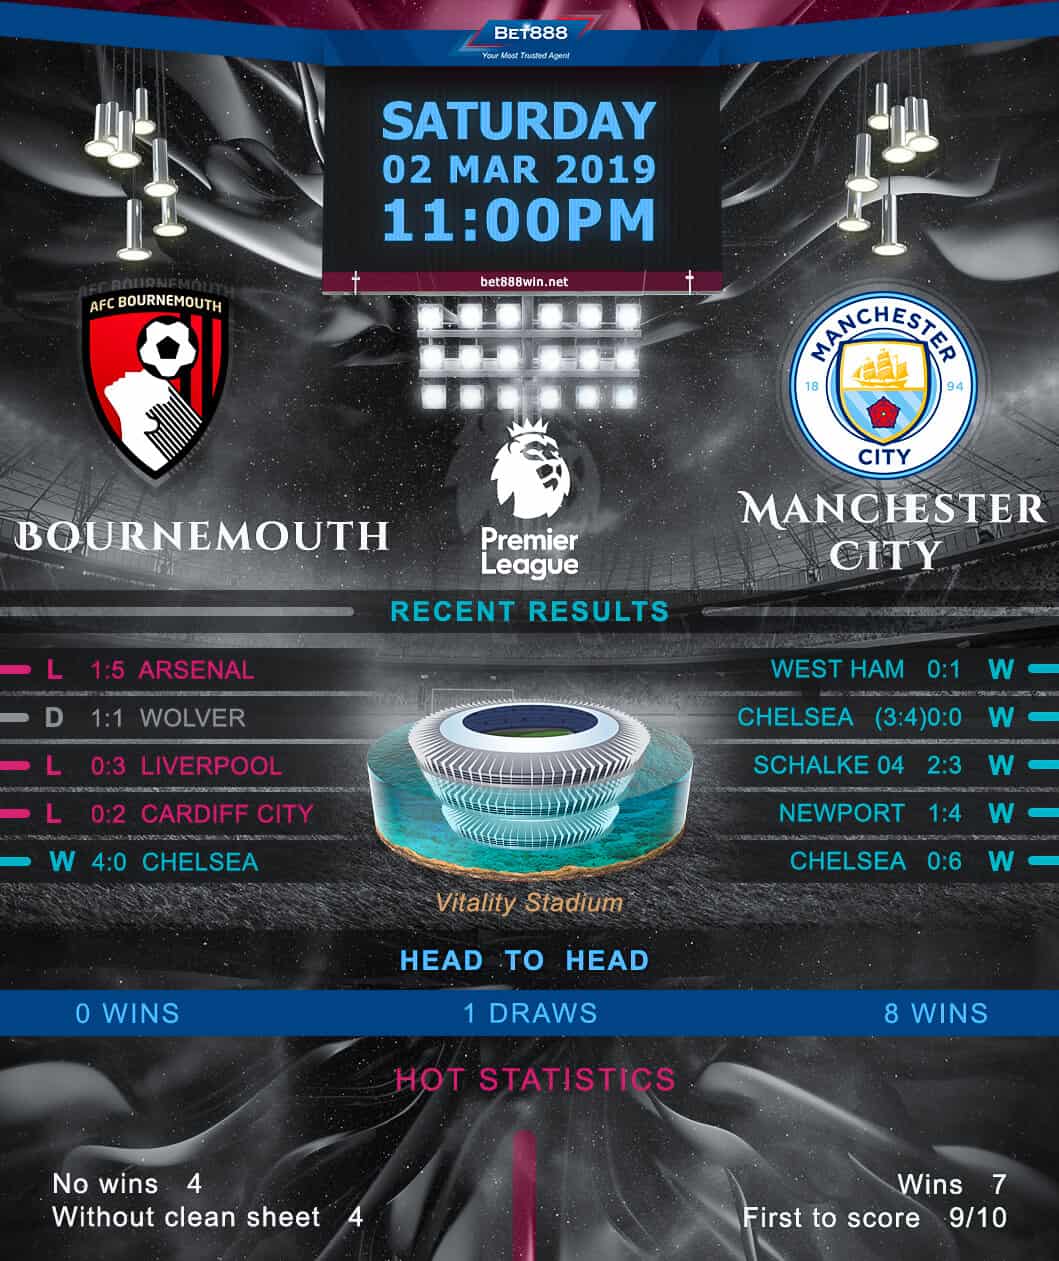 Bournemouth vs Manchester City 02/03/19